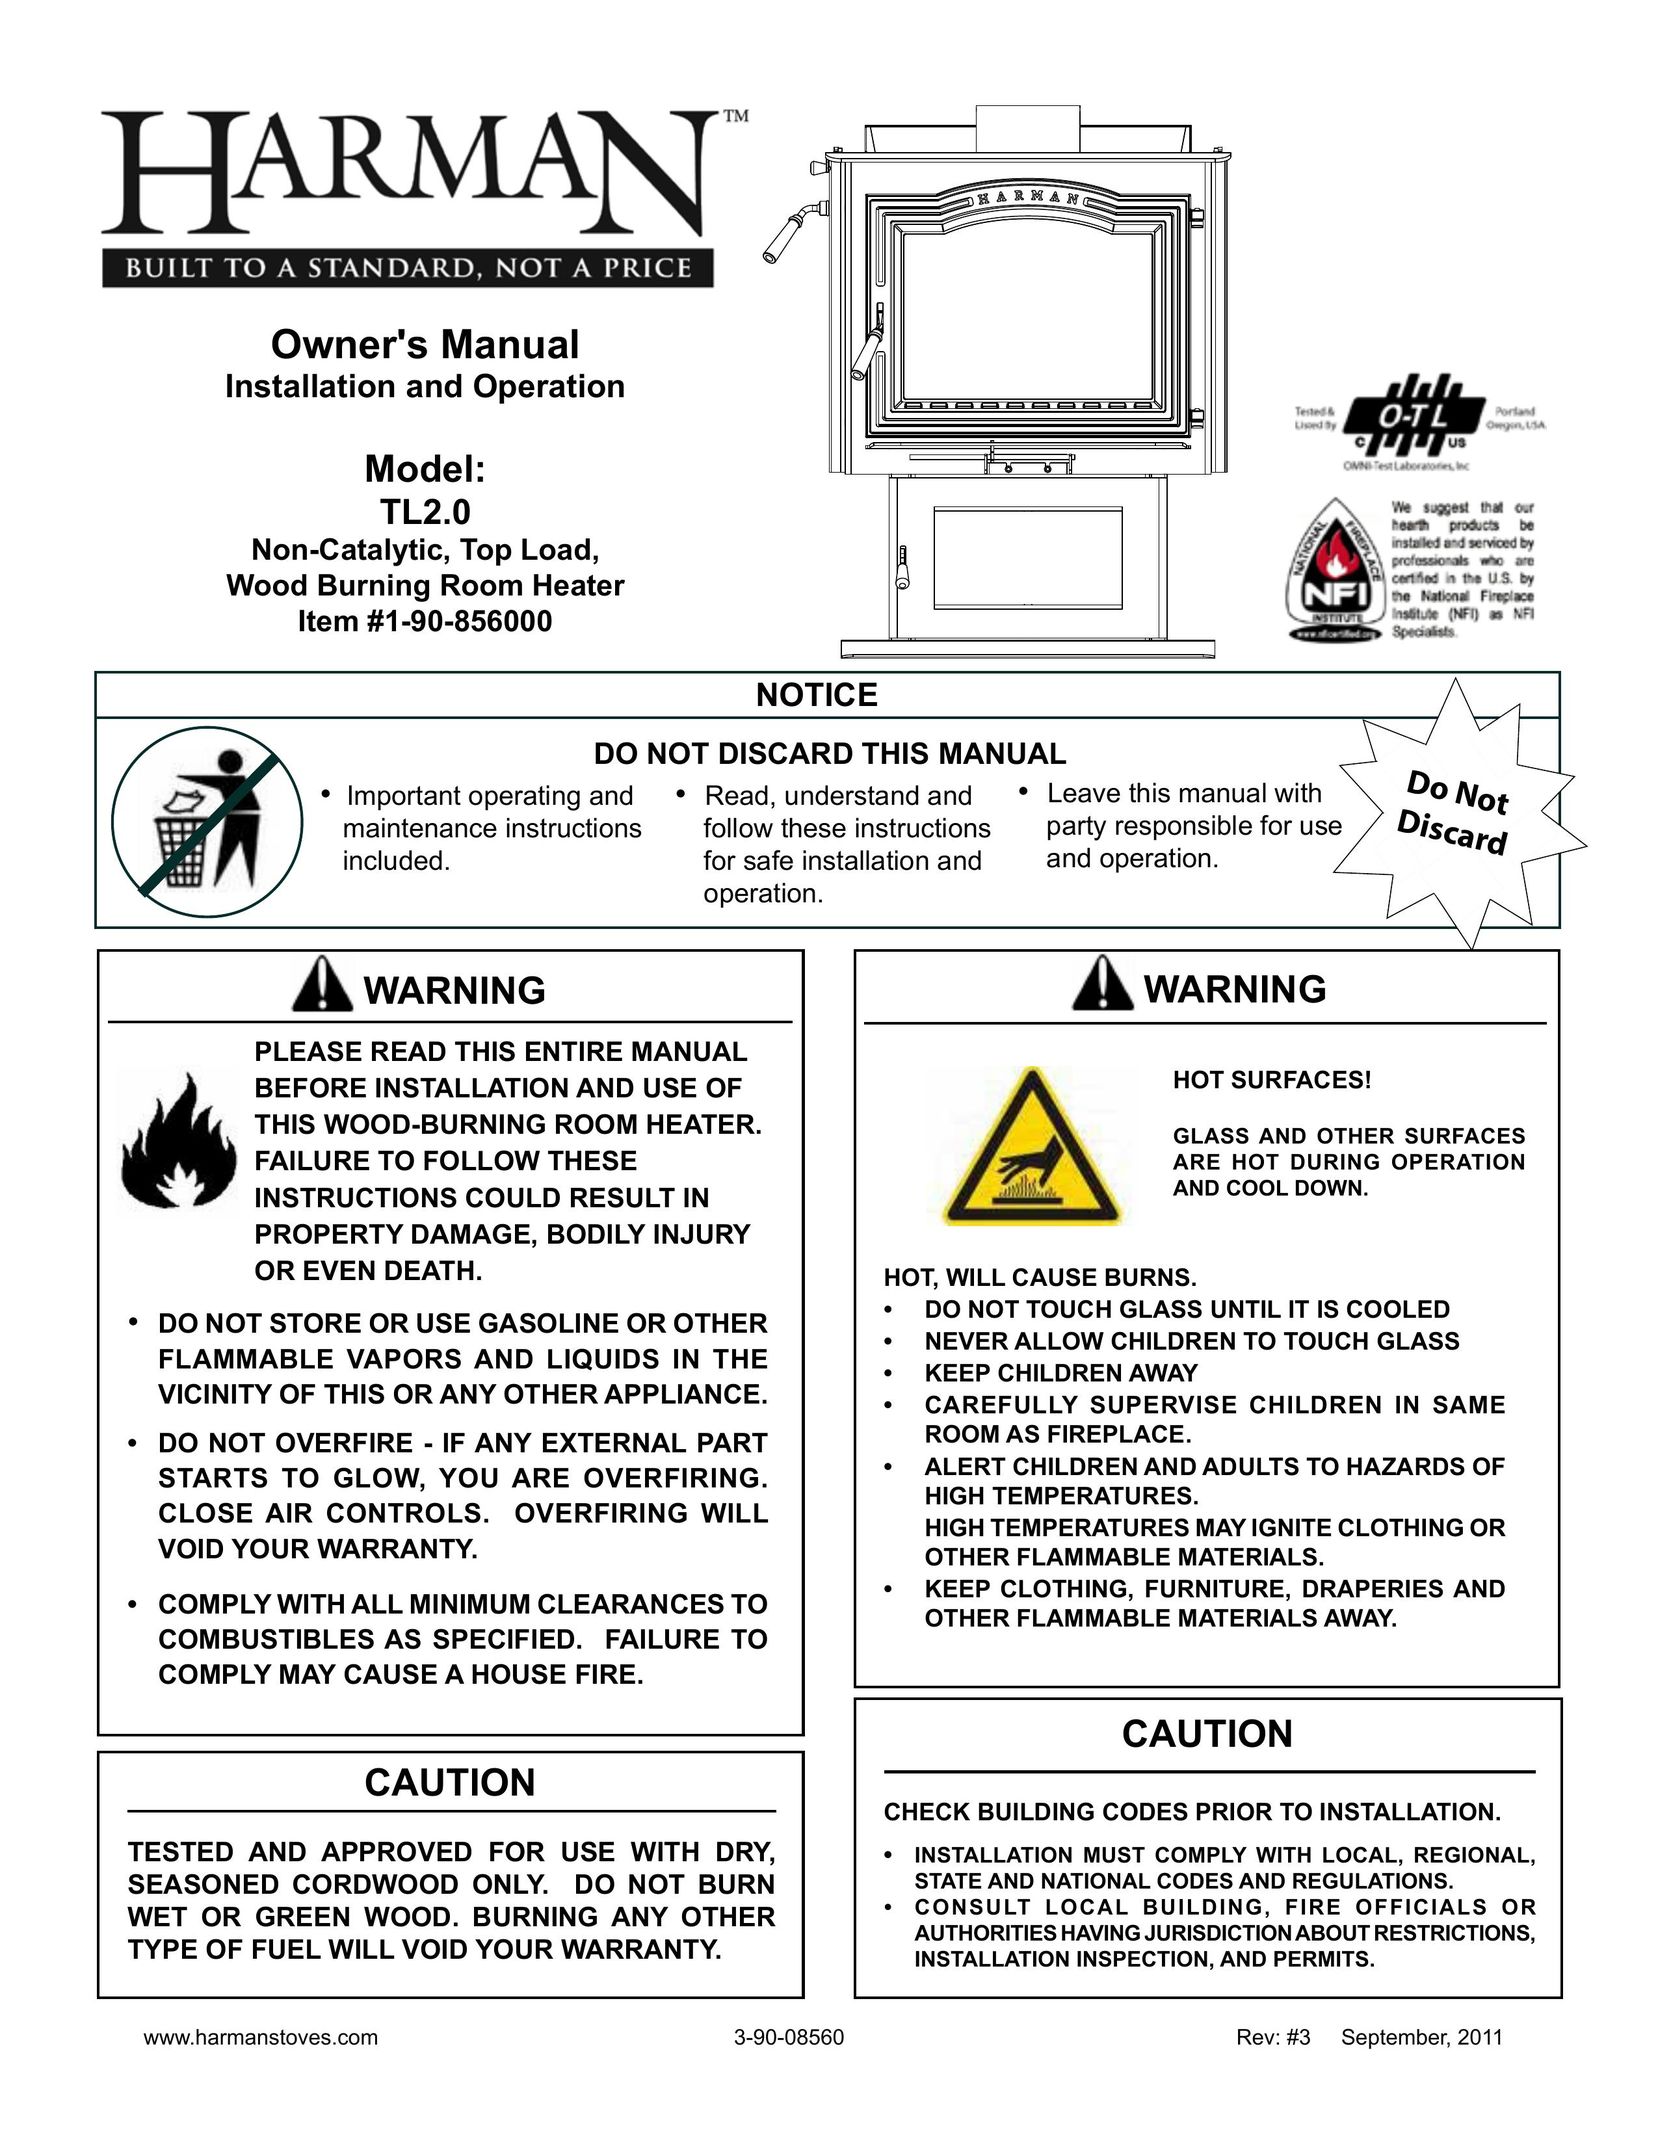 Harman Stove Company TL2.0 Electric Heater User Manual